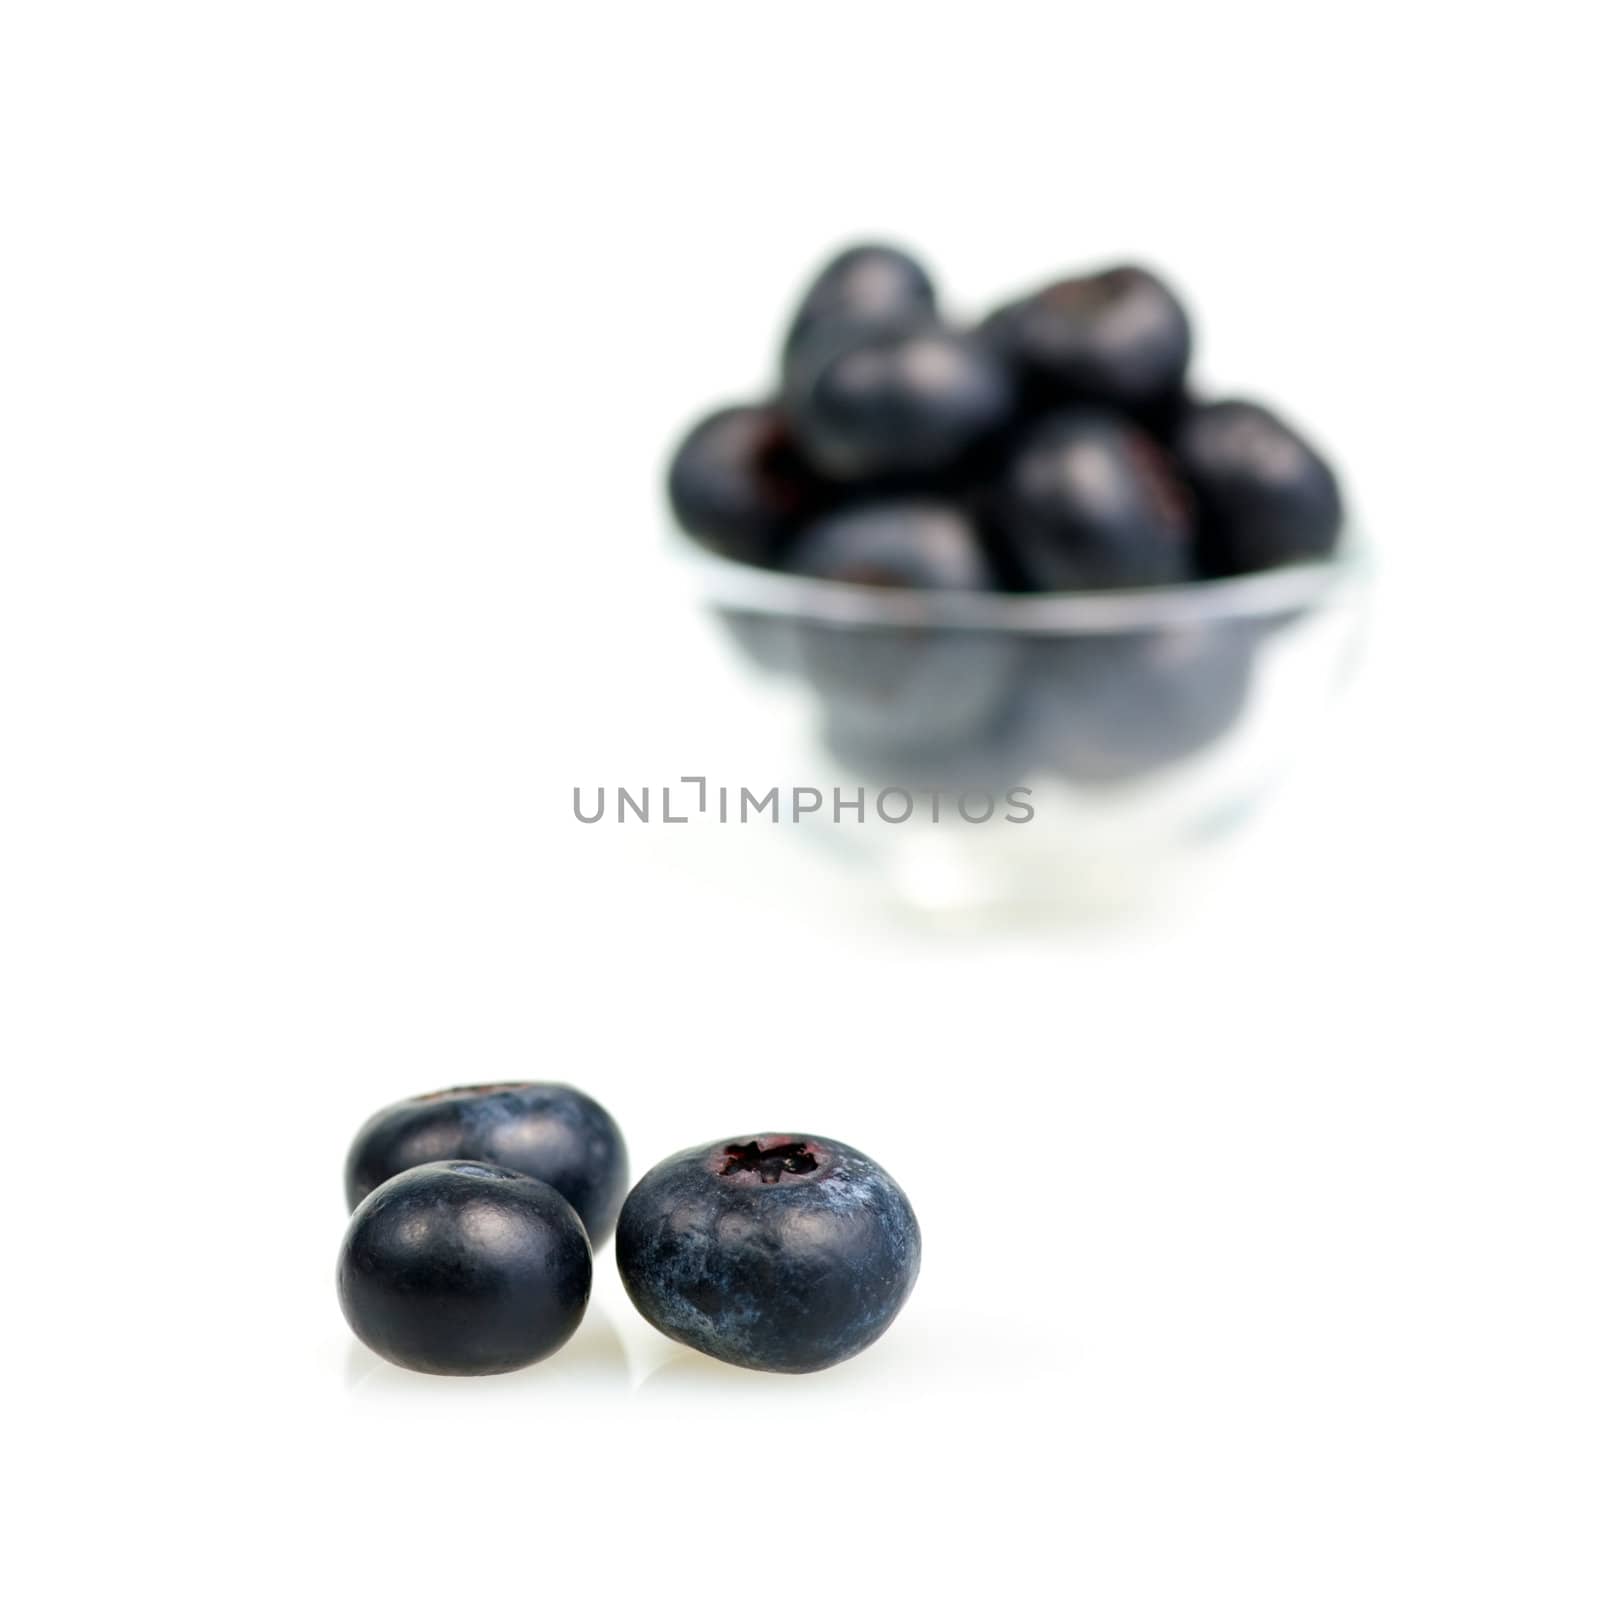 Blueberries on white background, shallow DOF